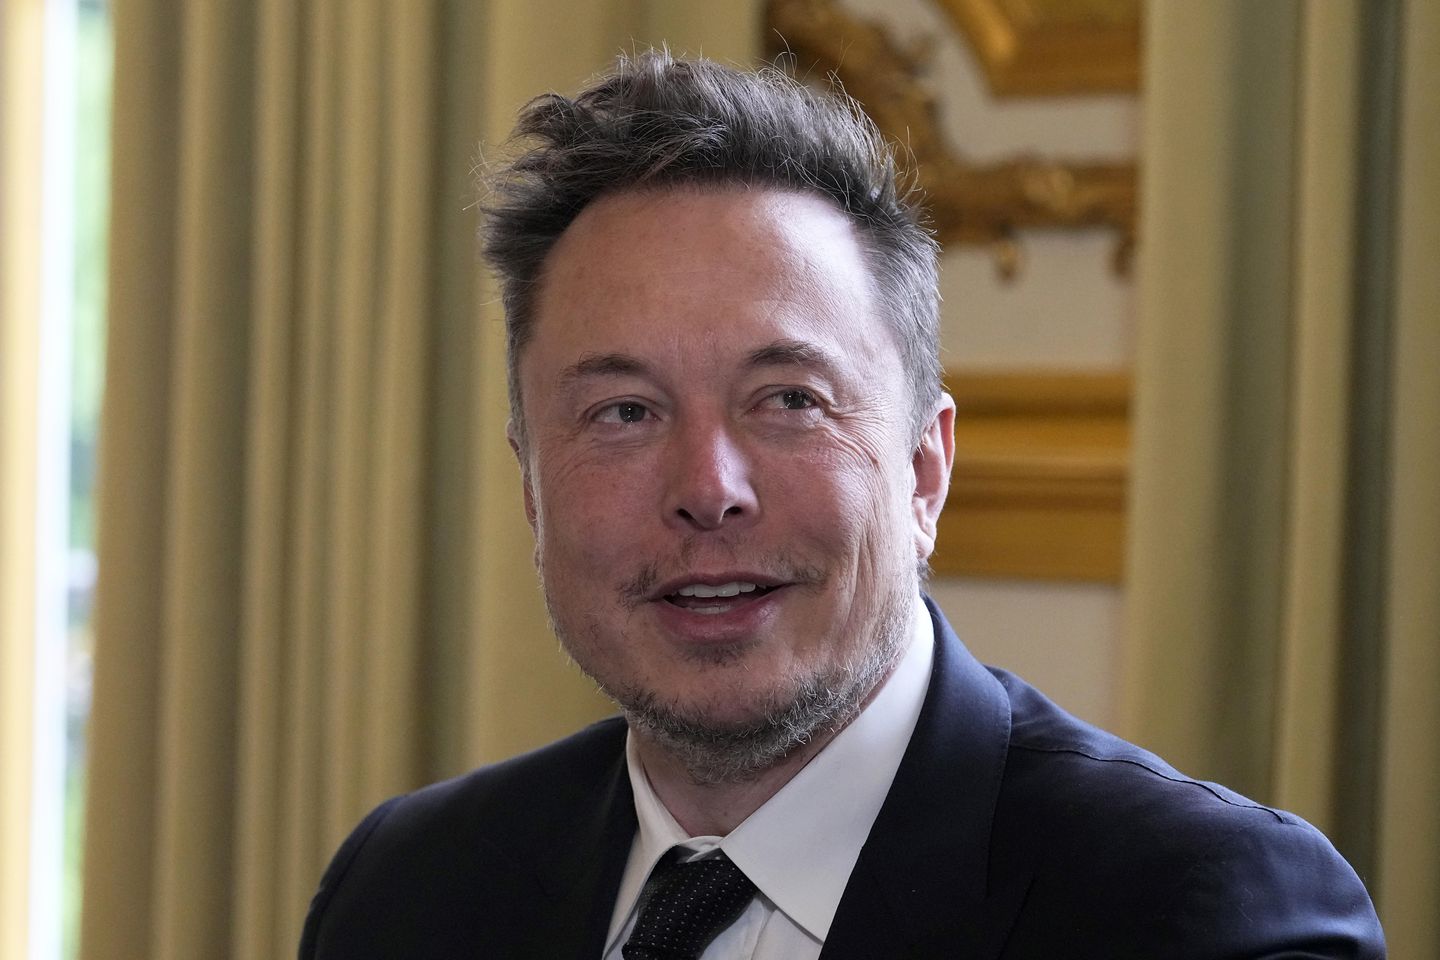 Elon Musk wants to build a digital town square. But his debut for DeSantis had a tech failure.